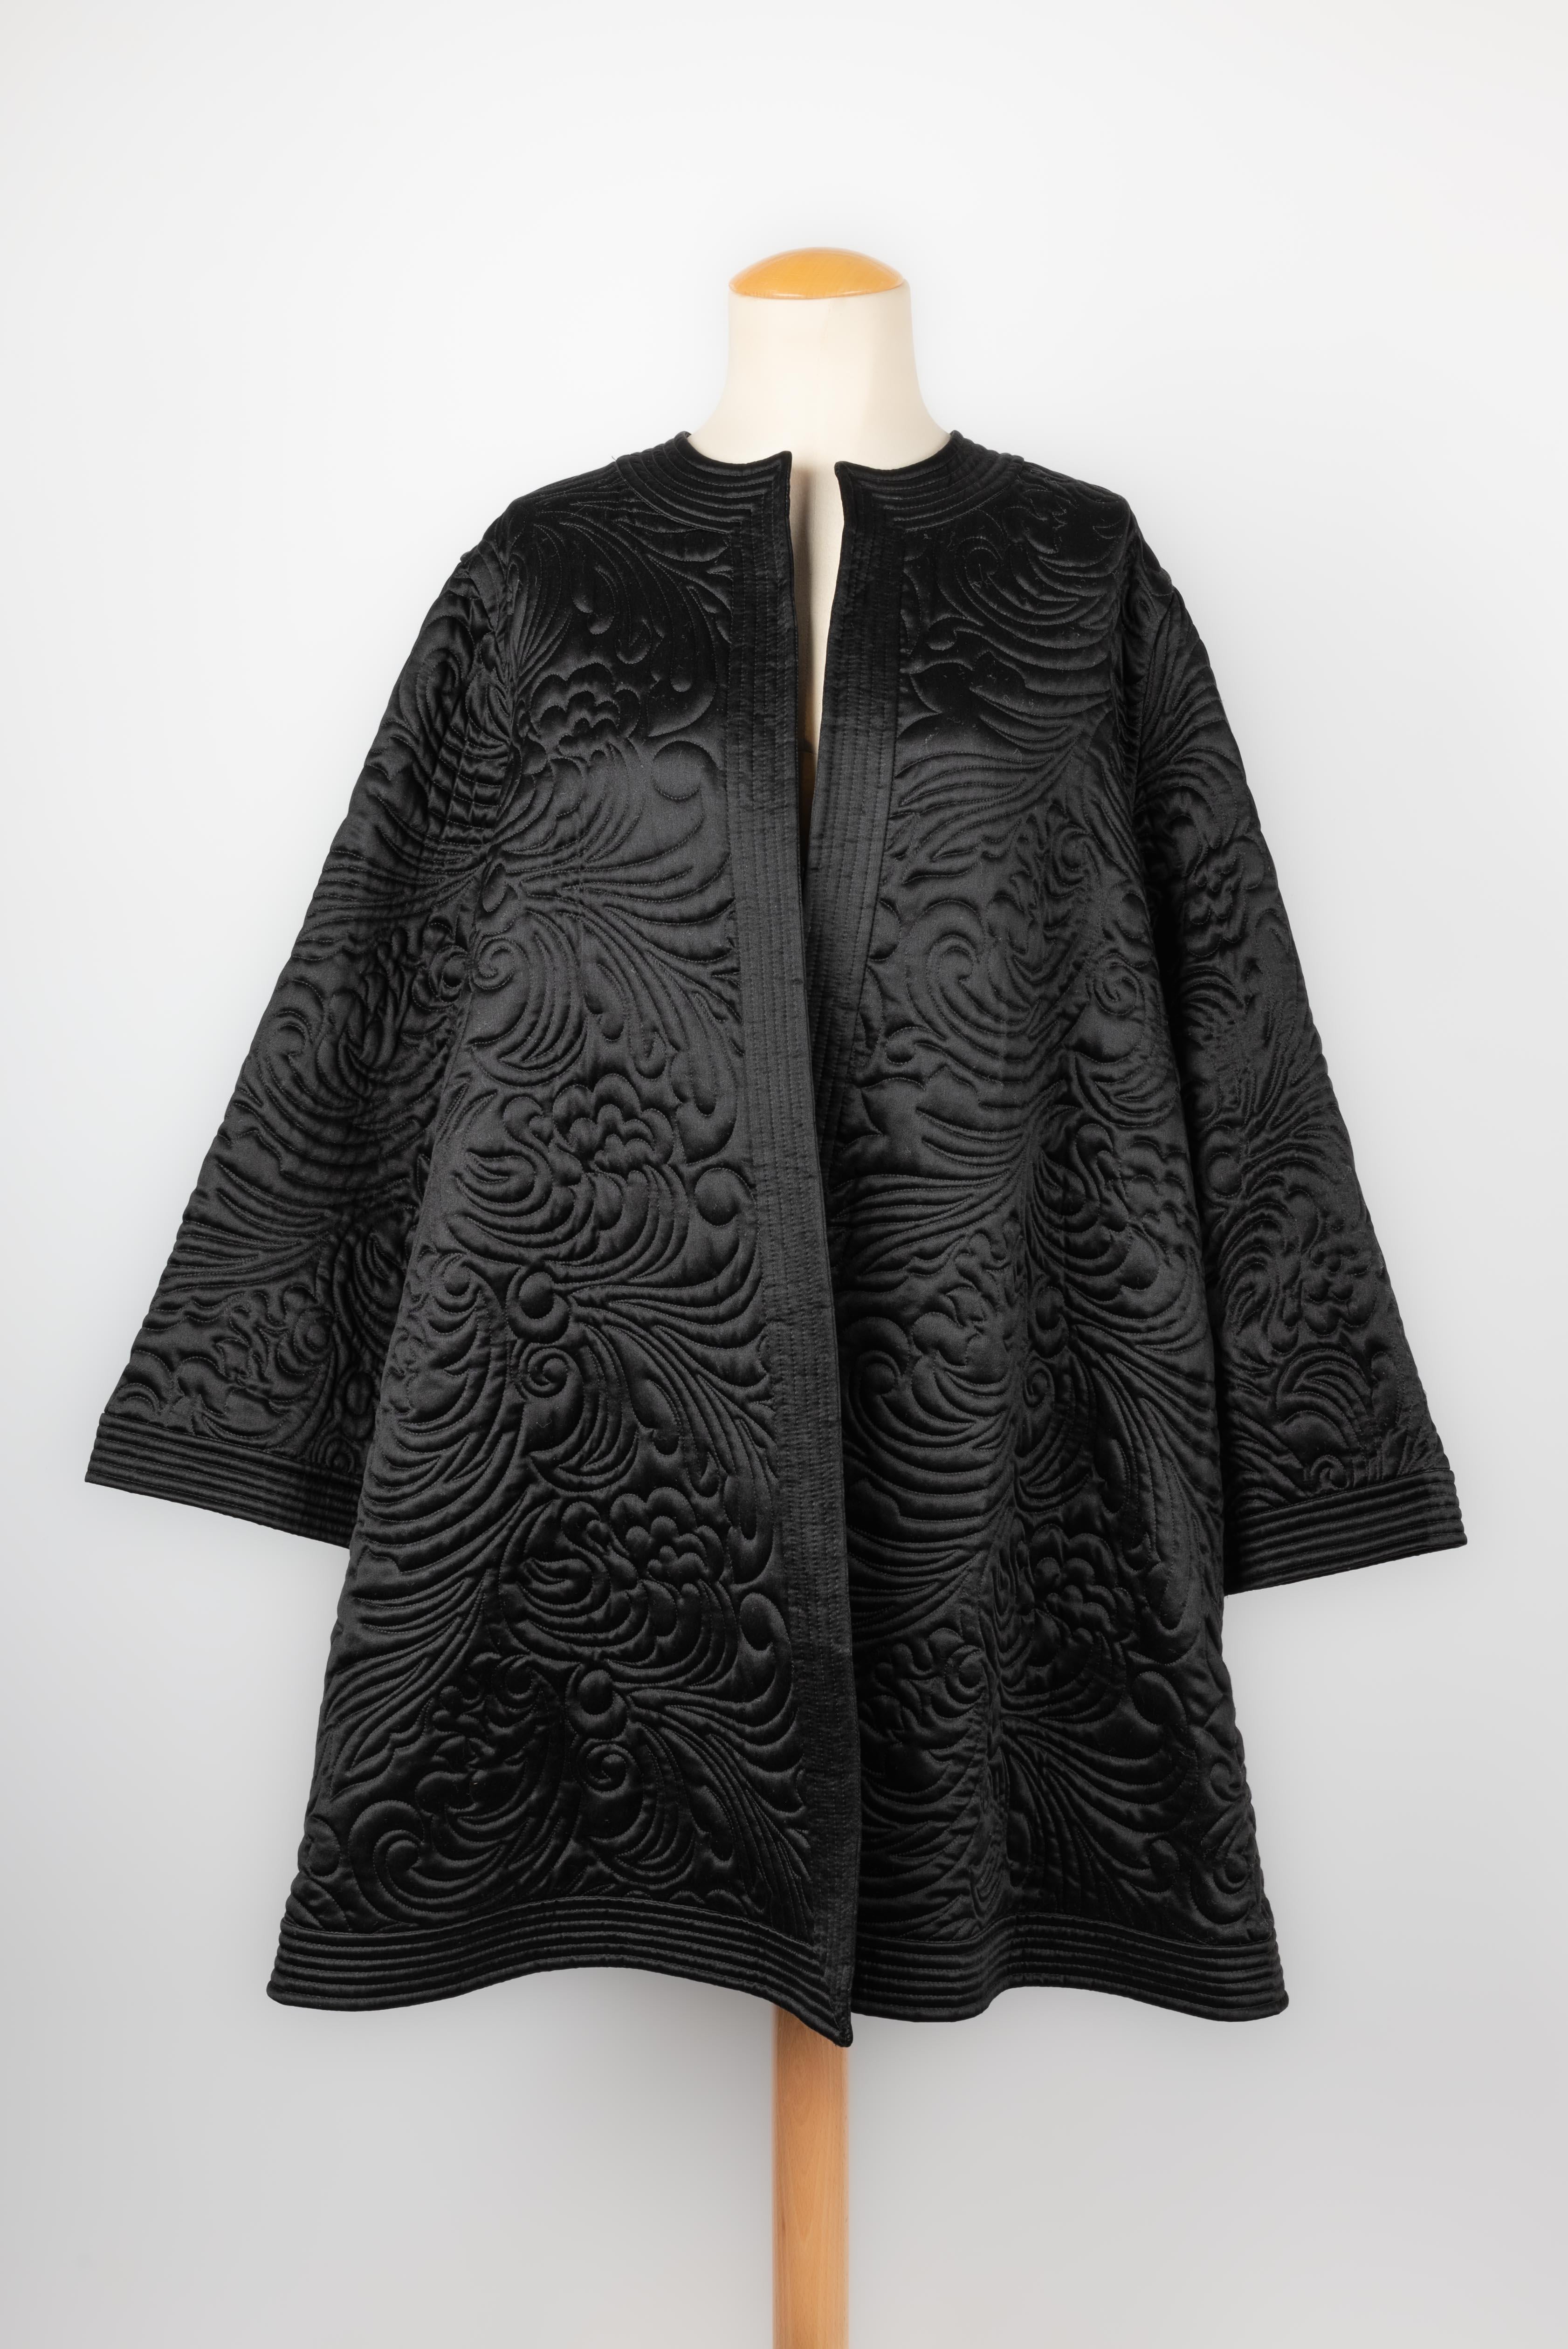 Women's or Men's Valentino Haute Couture kimonos double jackets 1990 For Sale